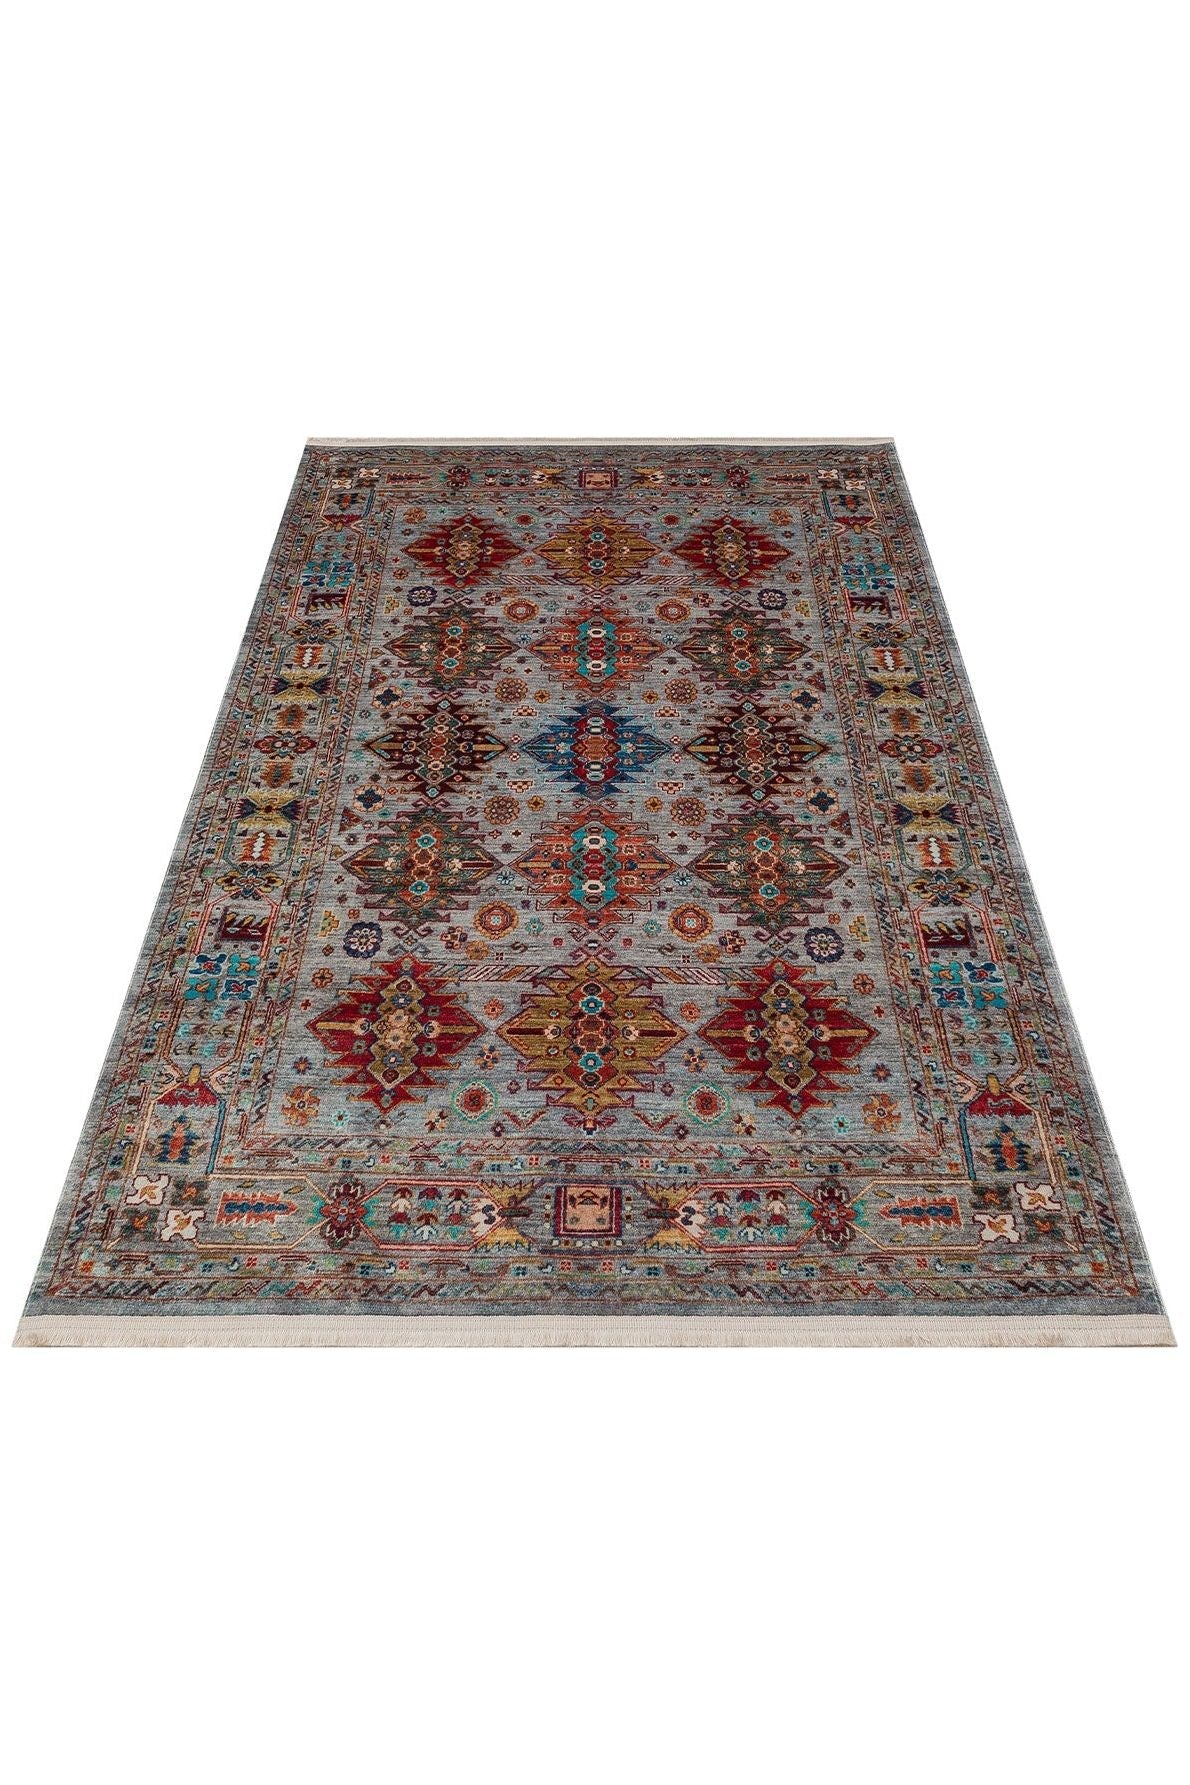 #Turkish_Carpets_Rugs# #Modern_Carpets# #Abrash_Carpets#User-Friendly Washable Anti-Slippery Made Carpets With Antique DesignsAtk 06 Aqua